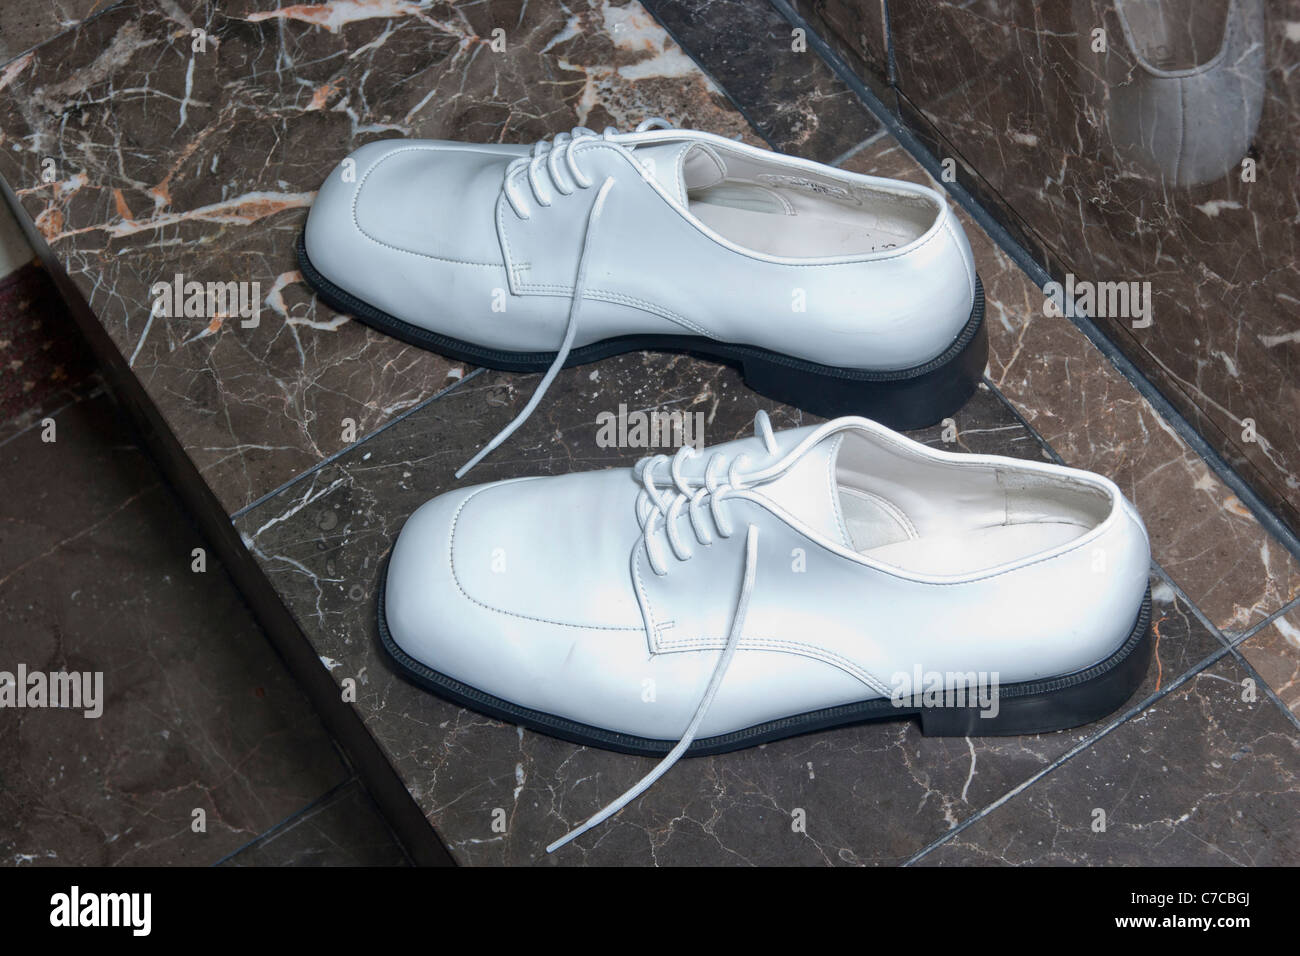 A pair of white shiny man's wedding shoes Stock Photo